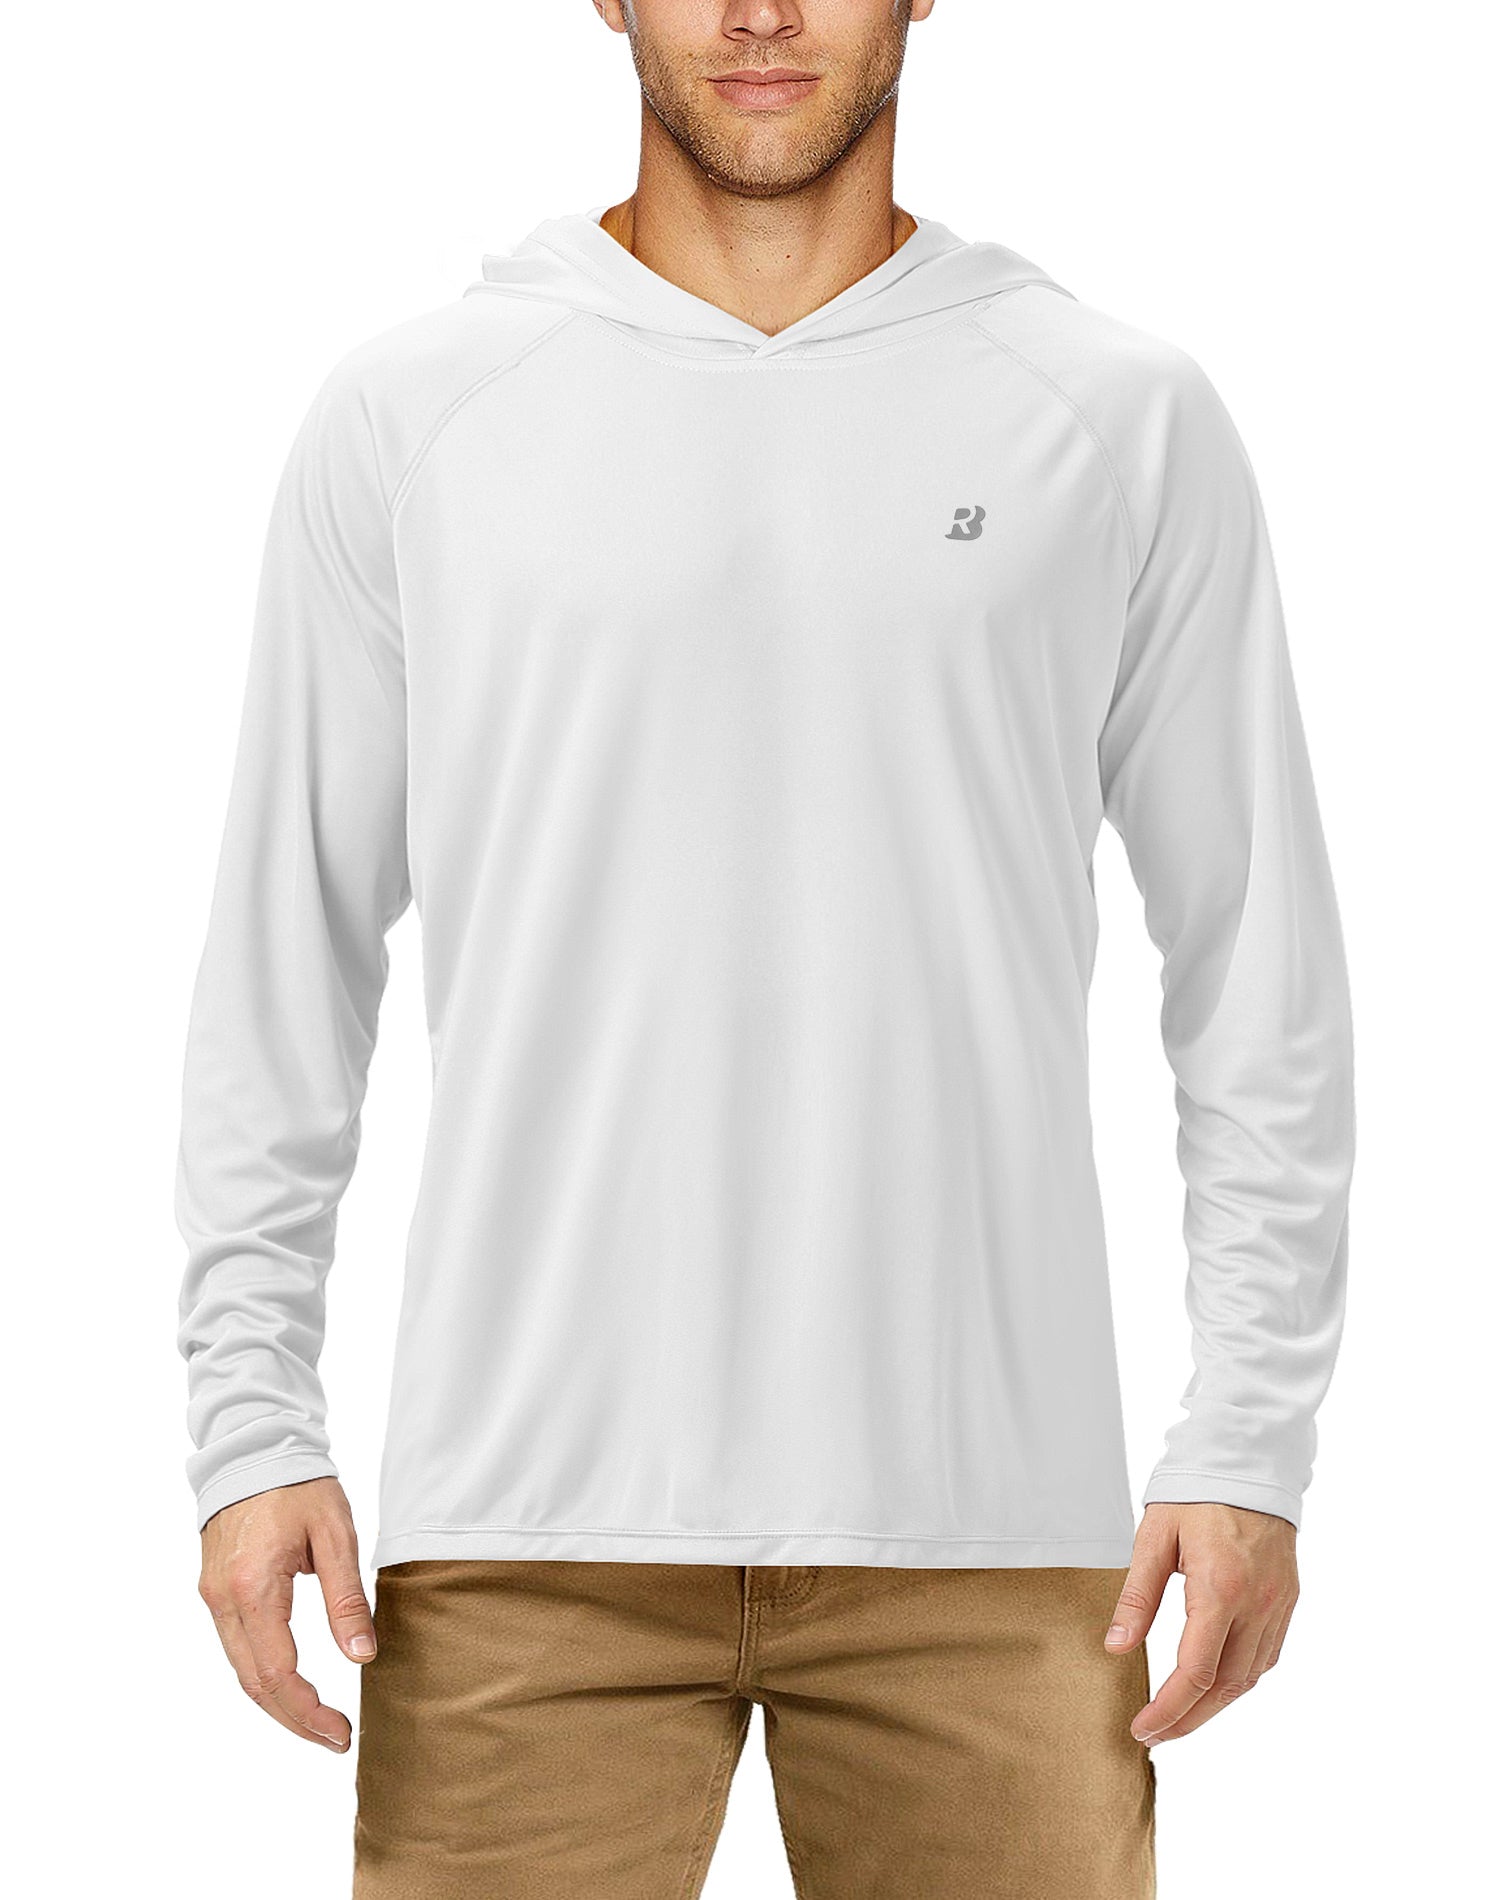 UPF50+ Men's Long Sleeve Fishing Shirts UV Protection Hoodie Casual Sport  Shirts